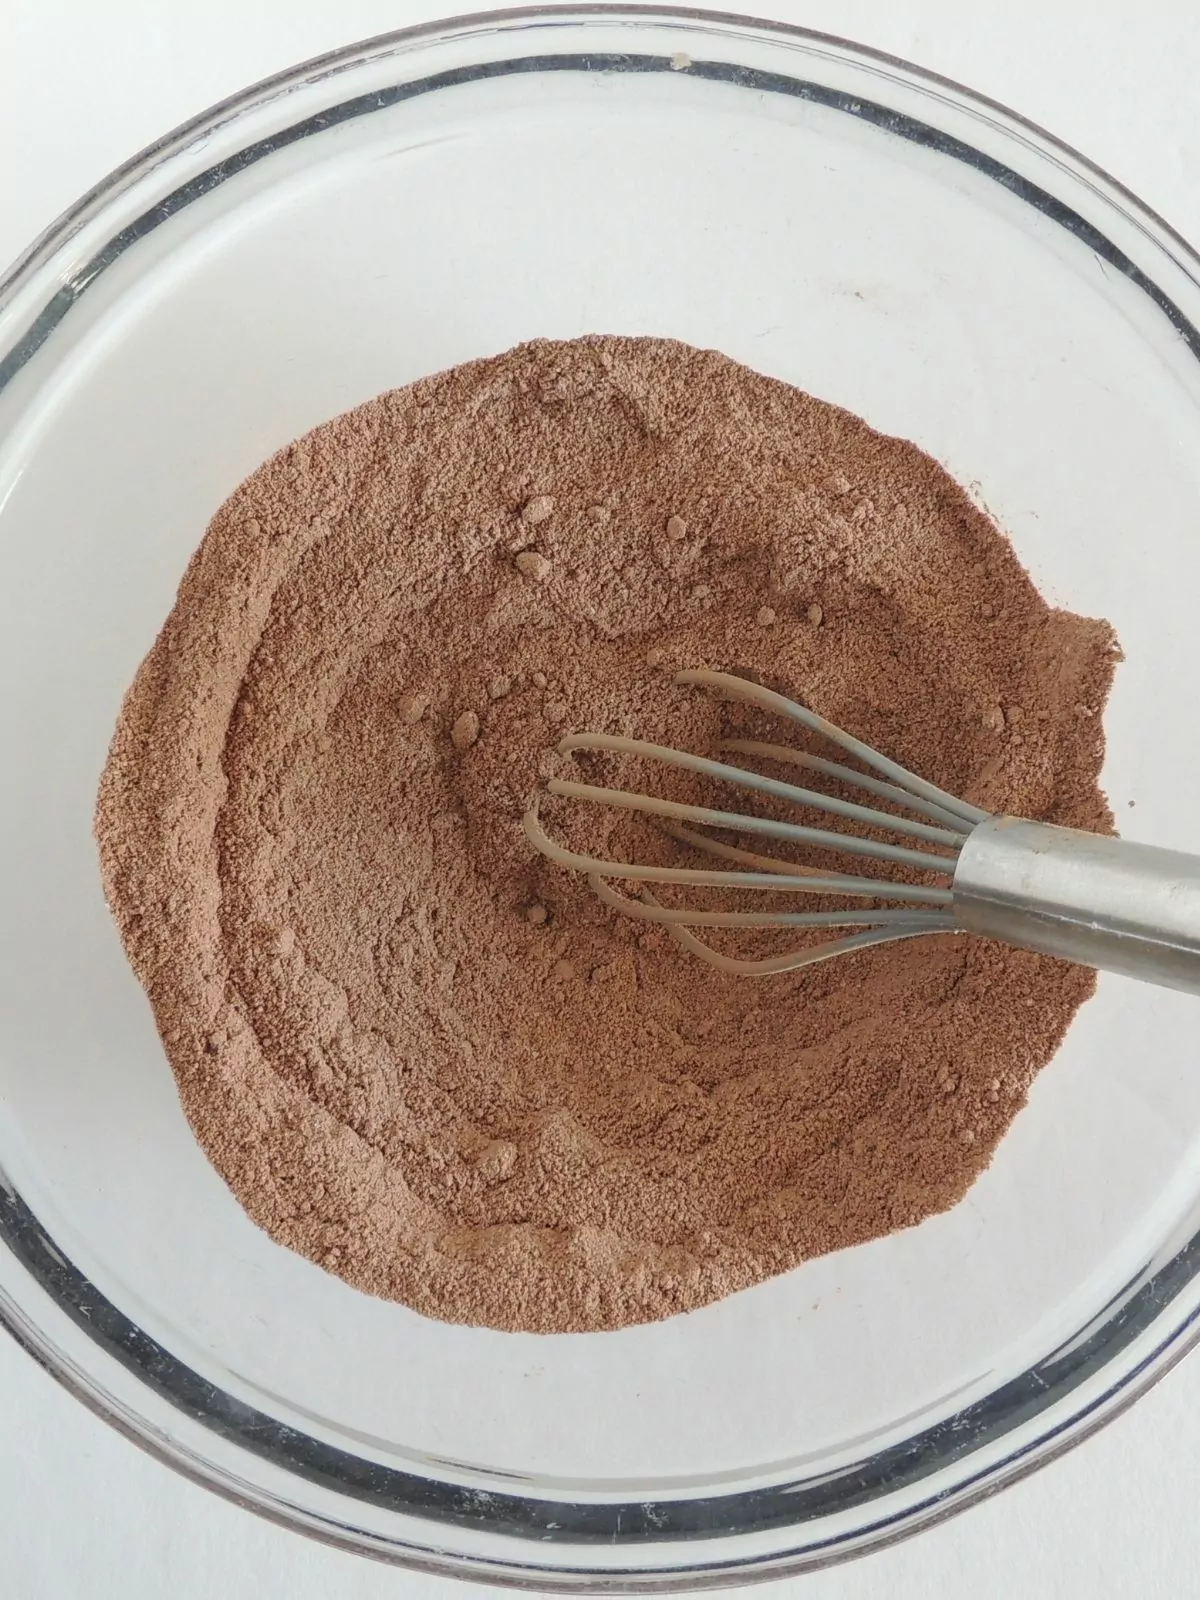 Brownie dry ingredients combined in bowl.